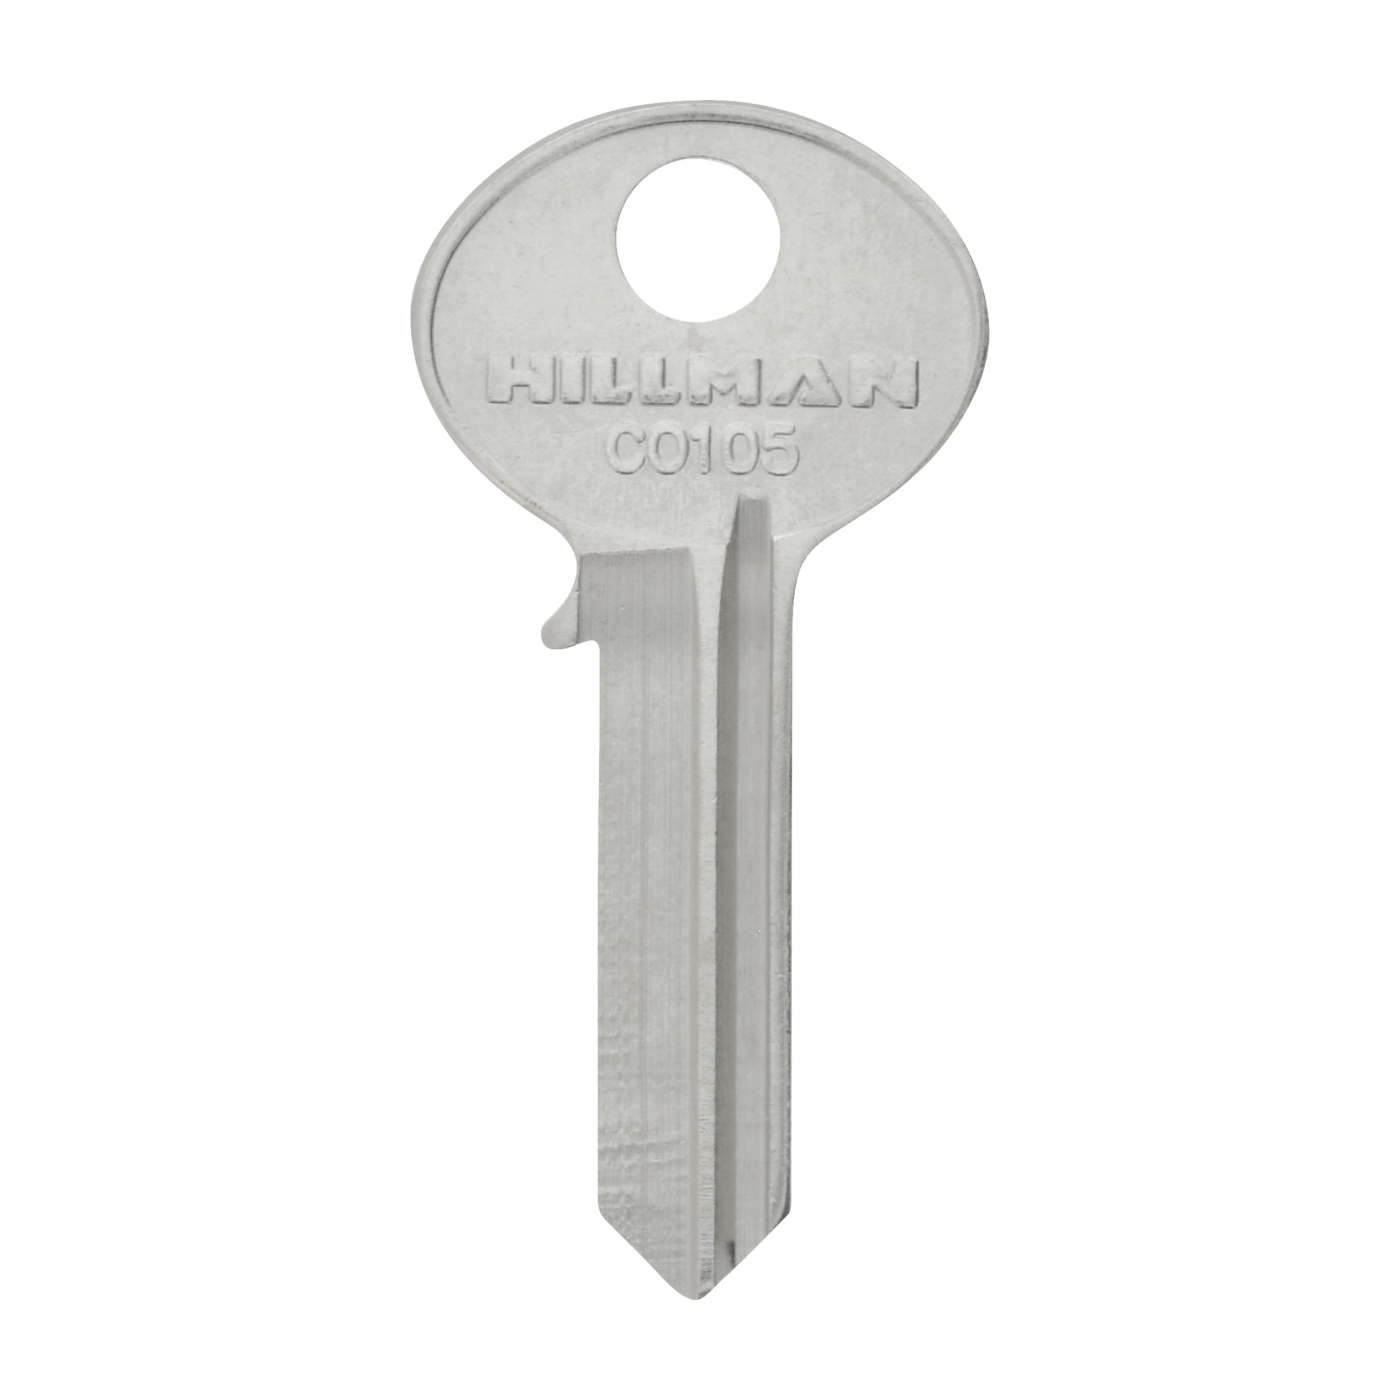 442030 Key Blank, Brass, Nickel-Plated, For: Corbin Locks